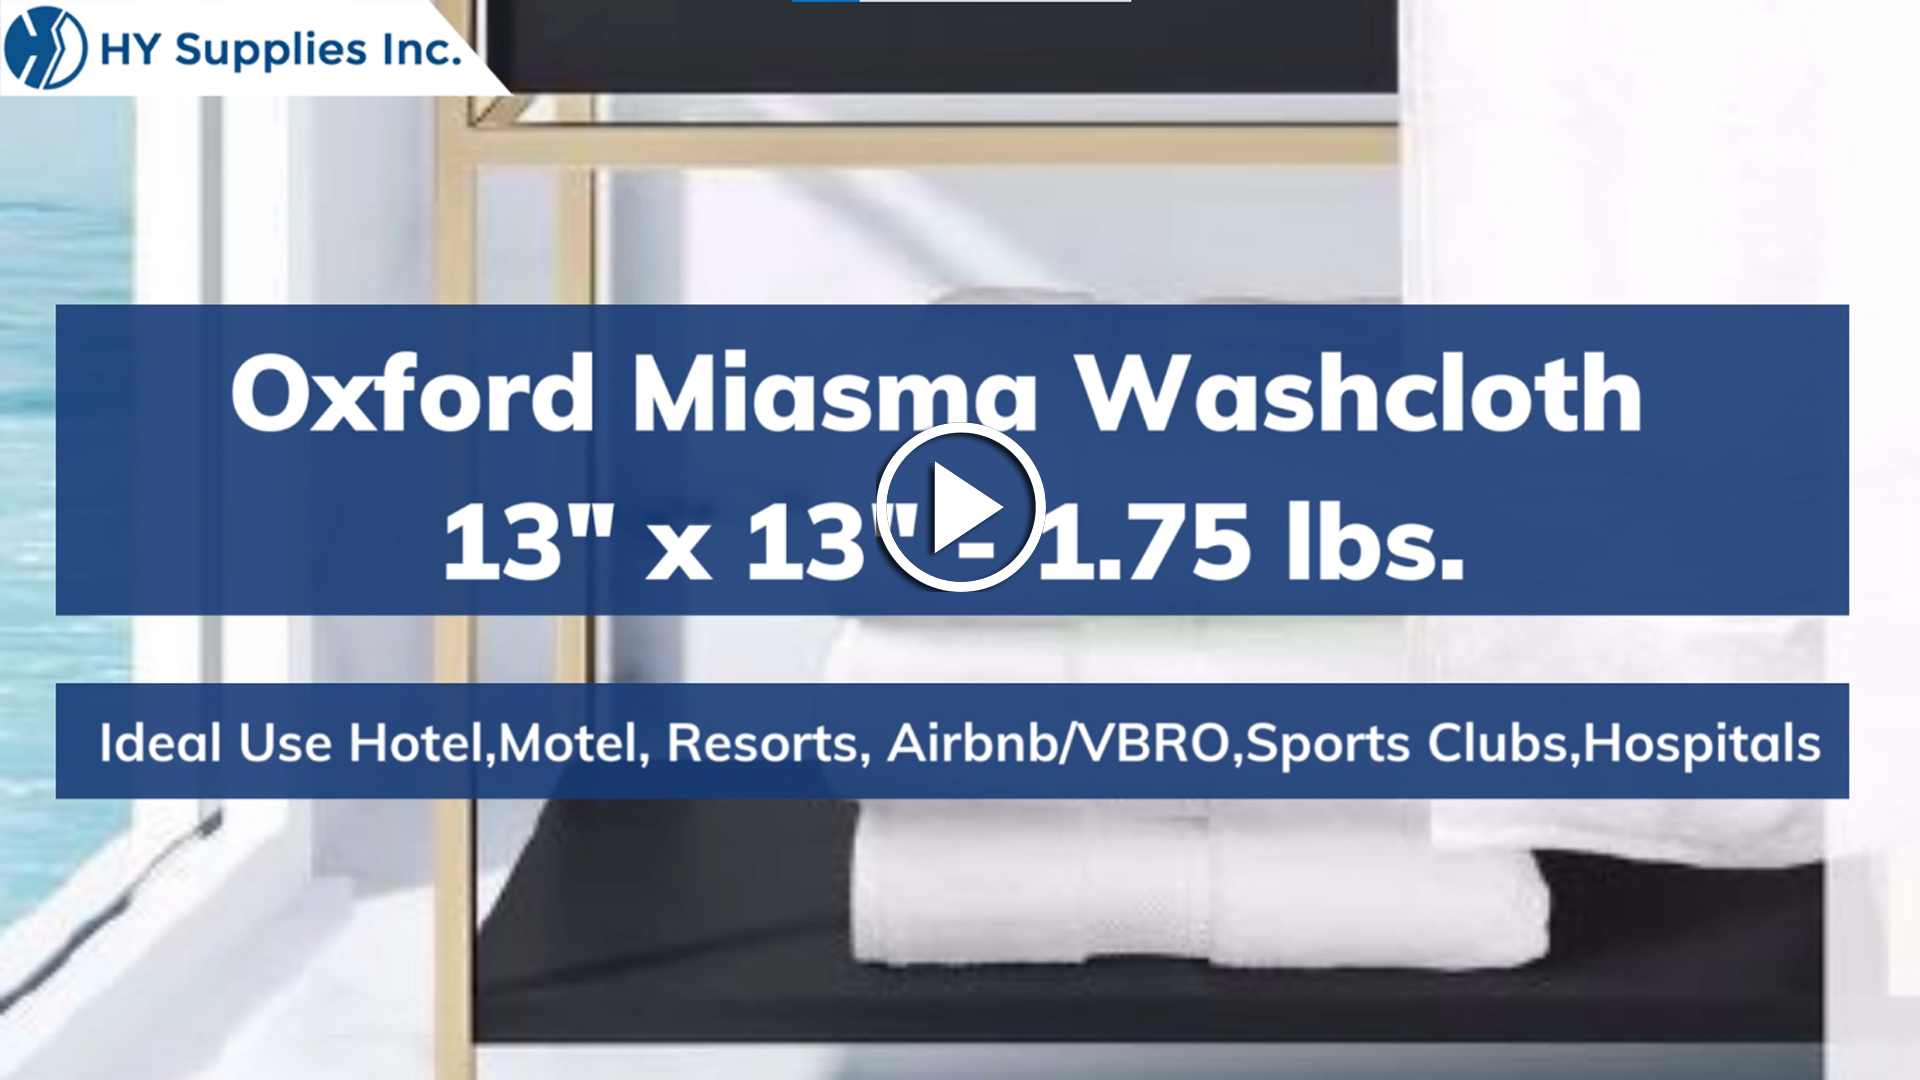 Oxford Miasma Washcloth - 13" x 13" - 1.75 lbs.